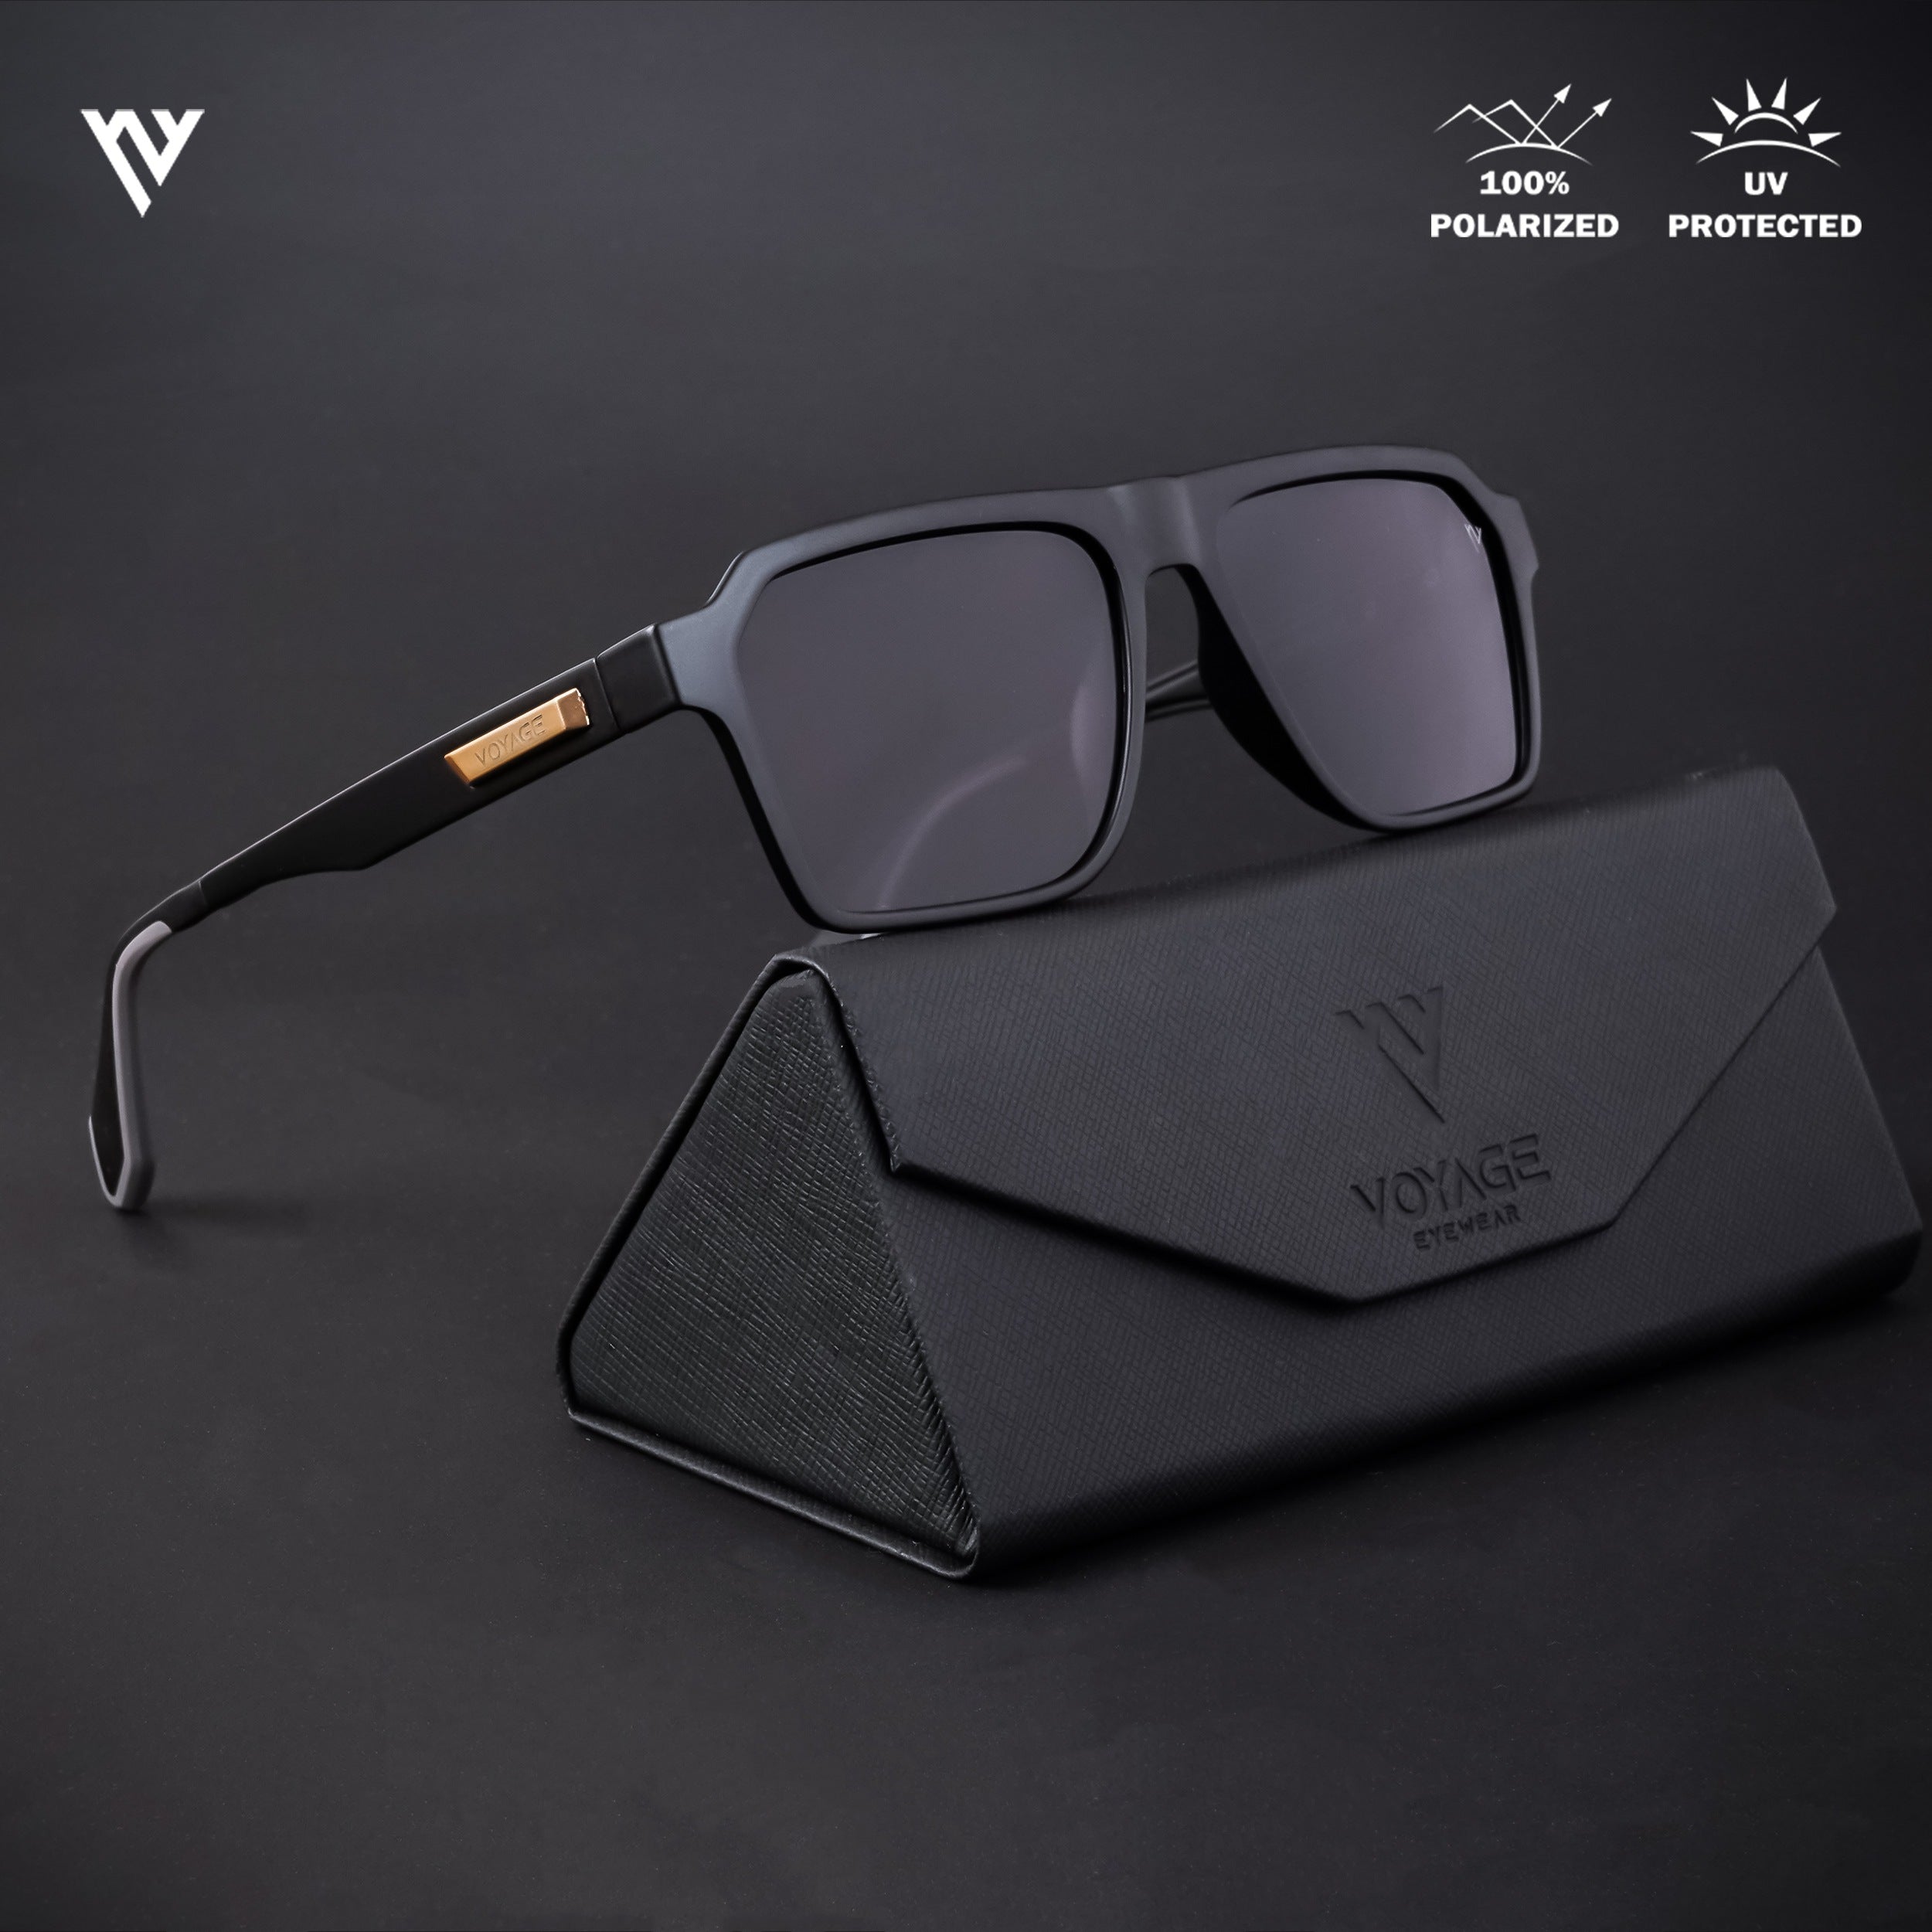 Voyage Active Matt Black Polarized Wayfarer Sunglasses for Men & Women - PMG4452